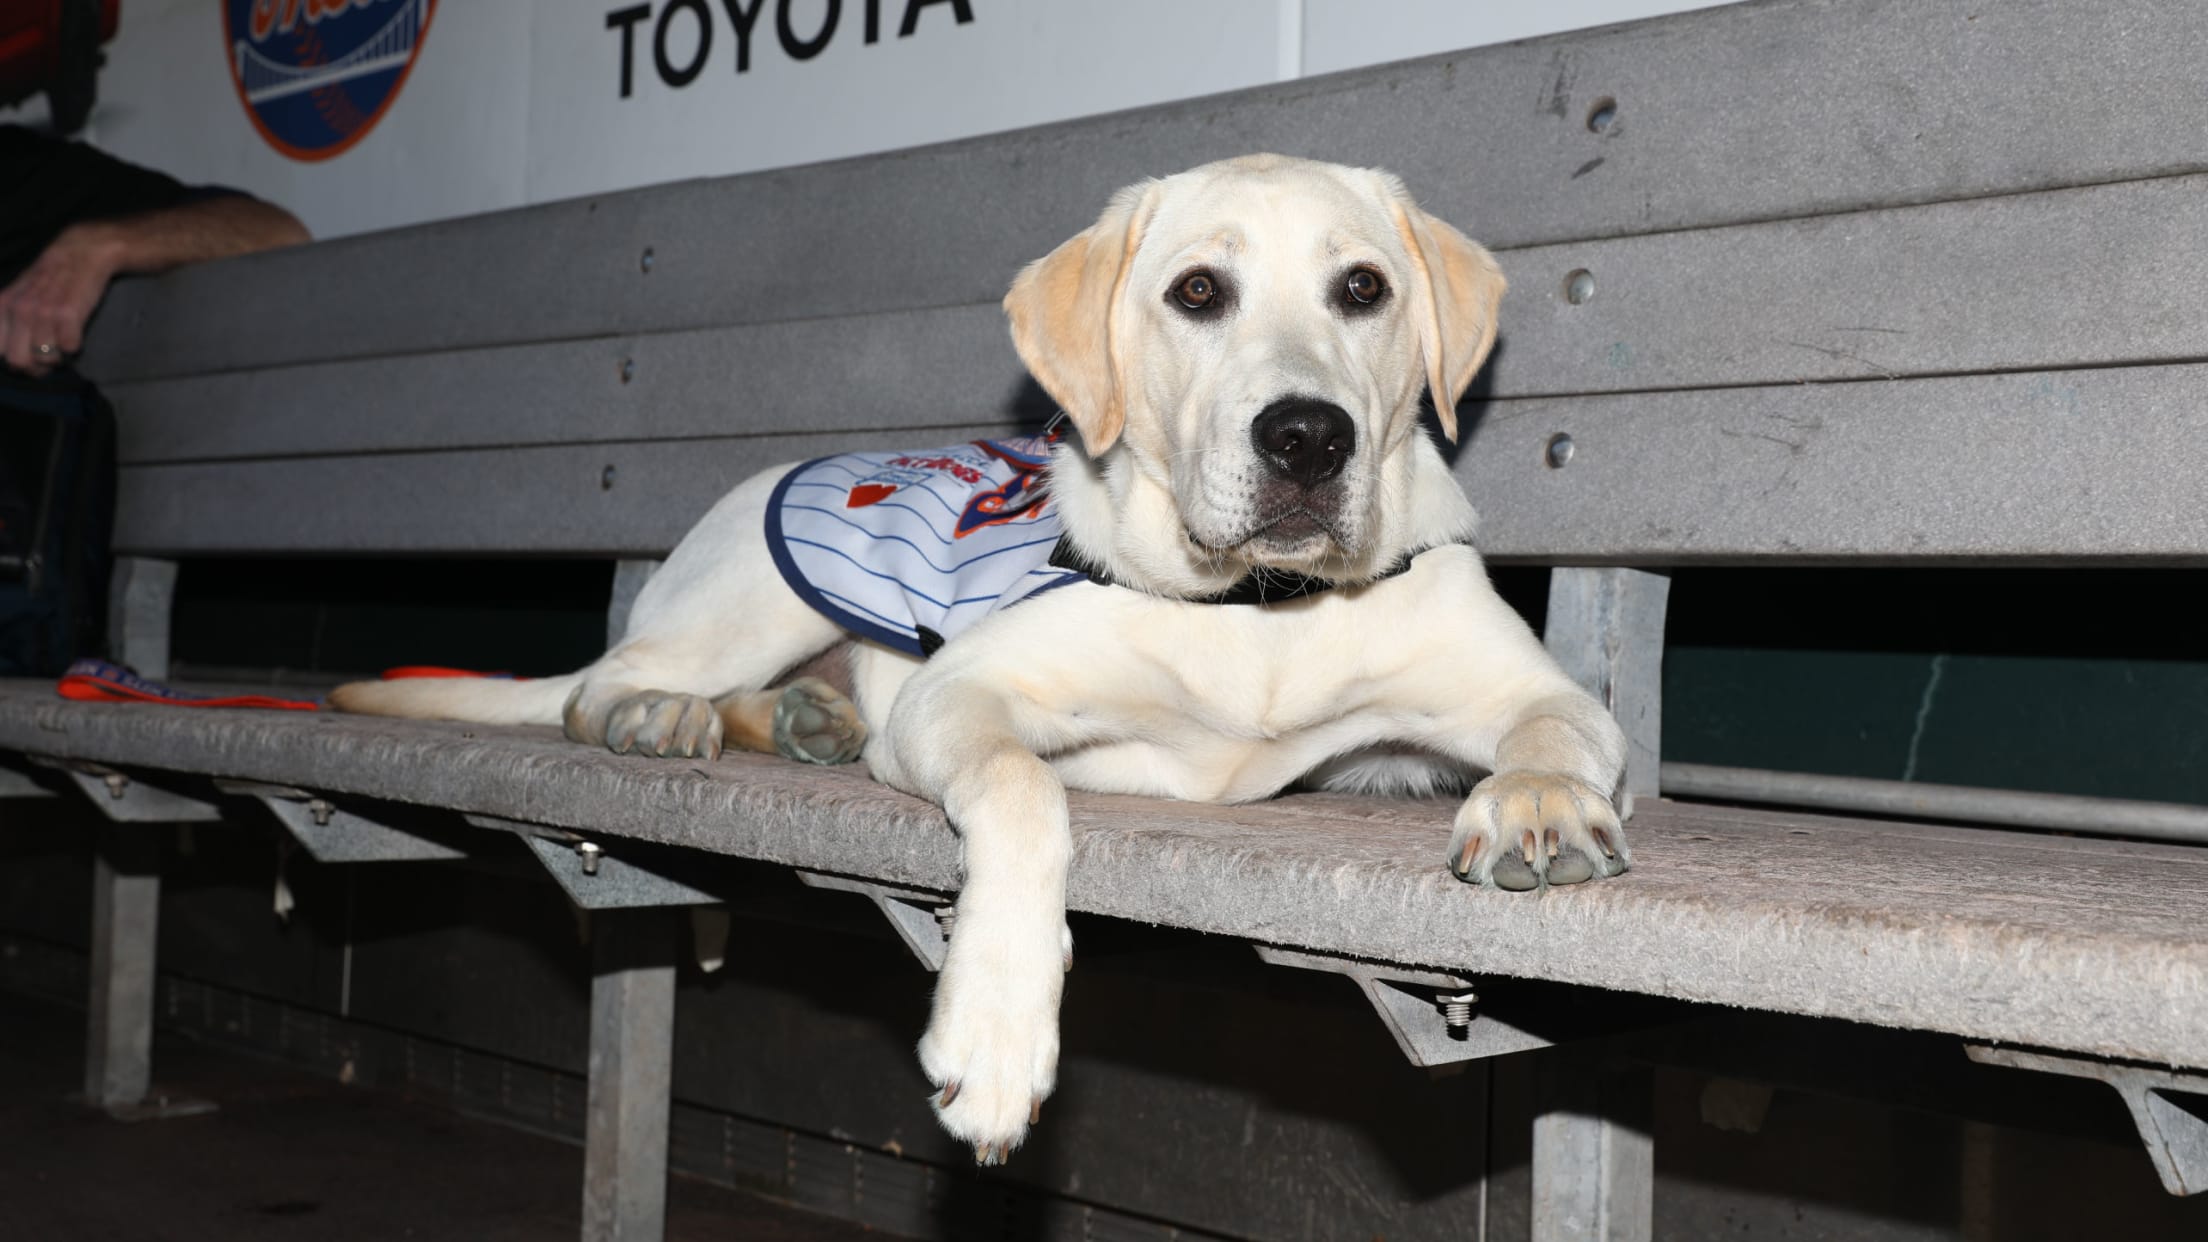 Meet the New York Mets service pup, Seaver